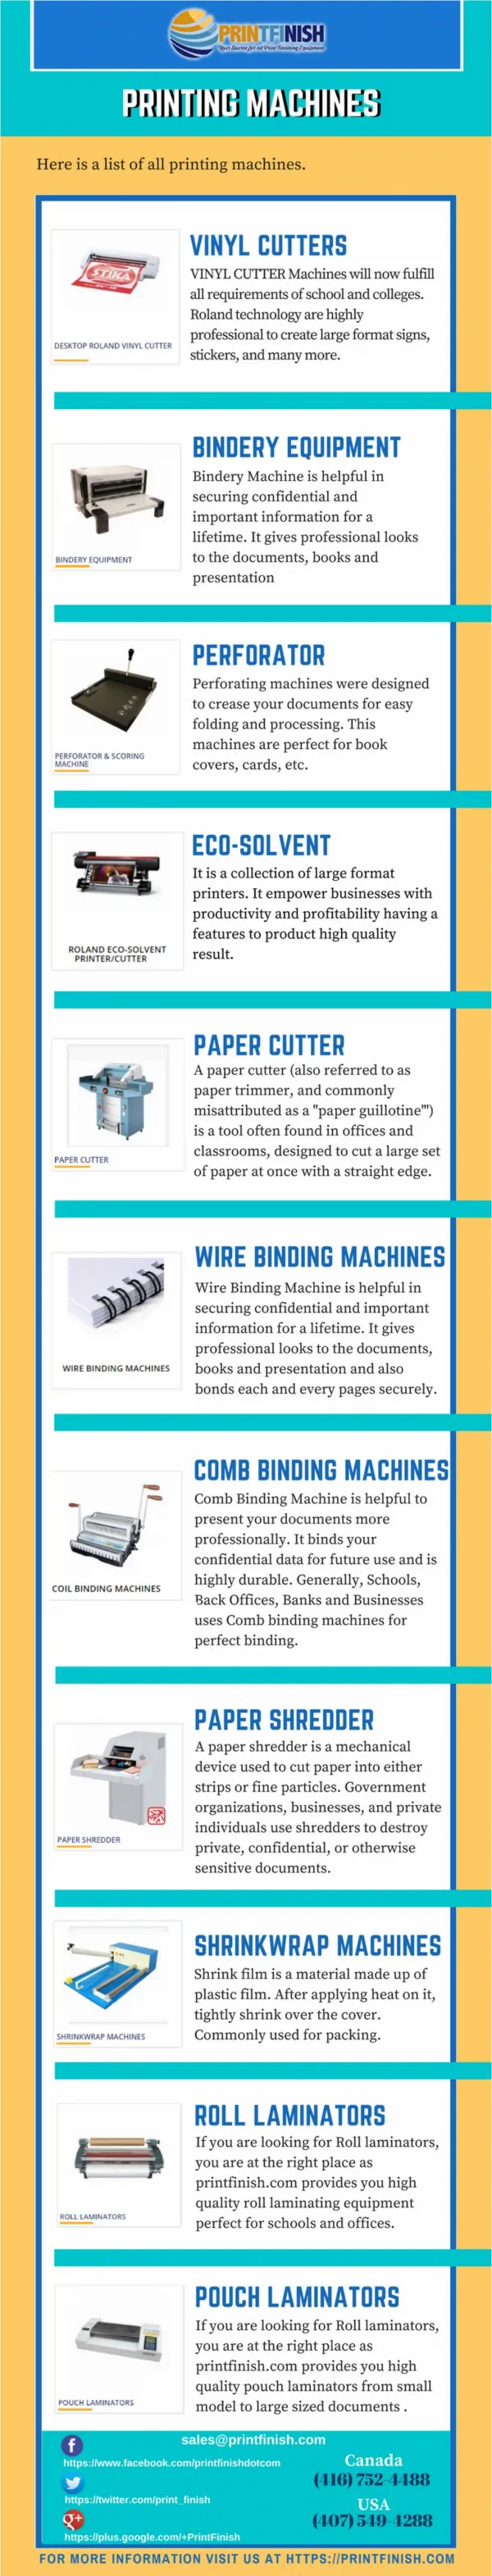 Buy Printing Machines at Printfinish.com